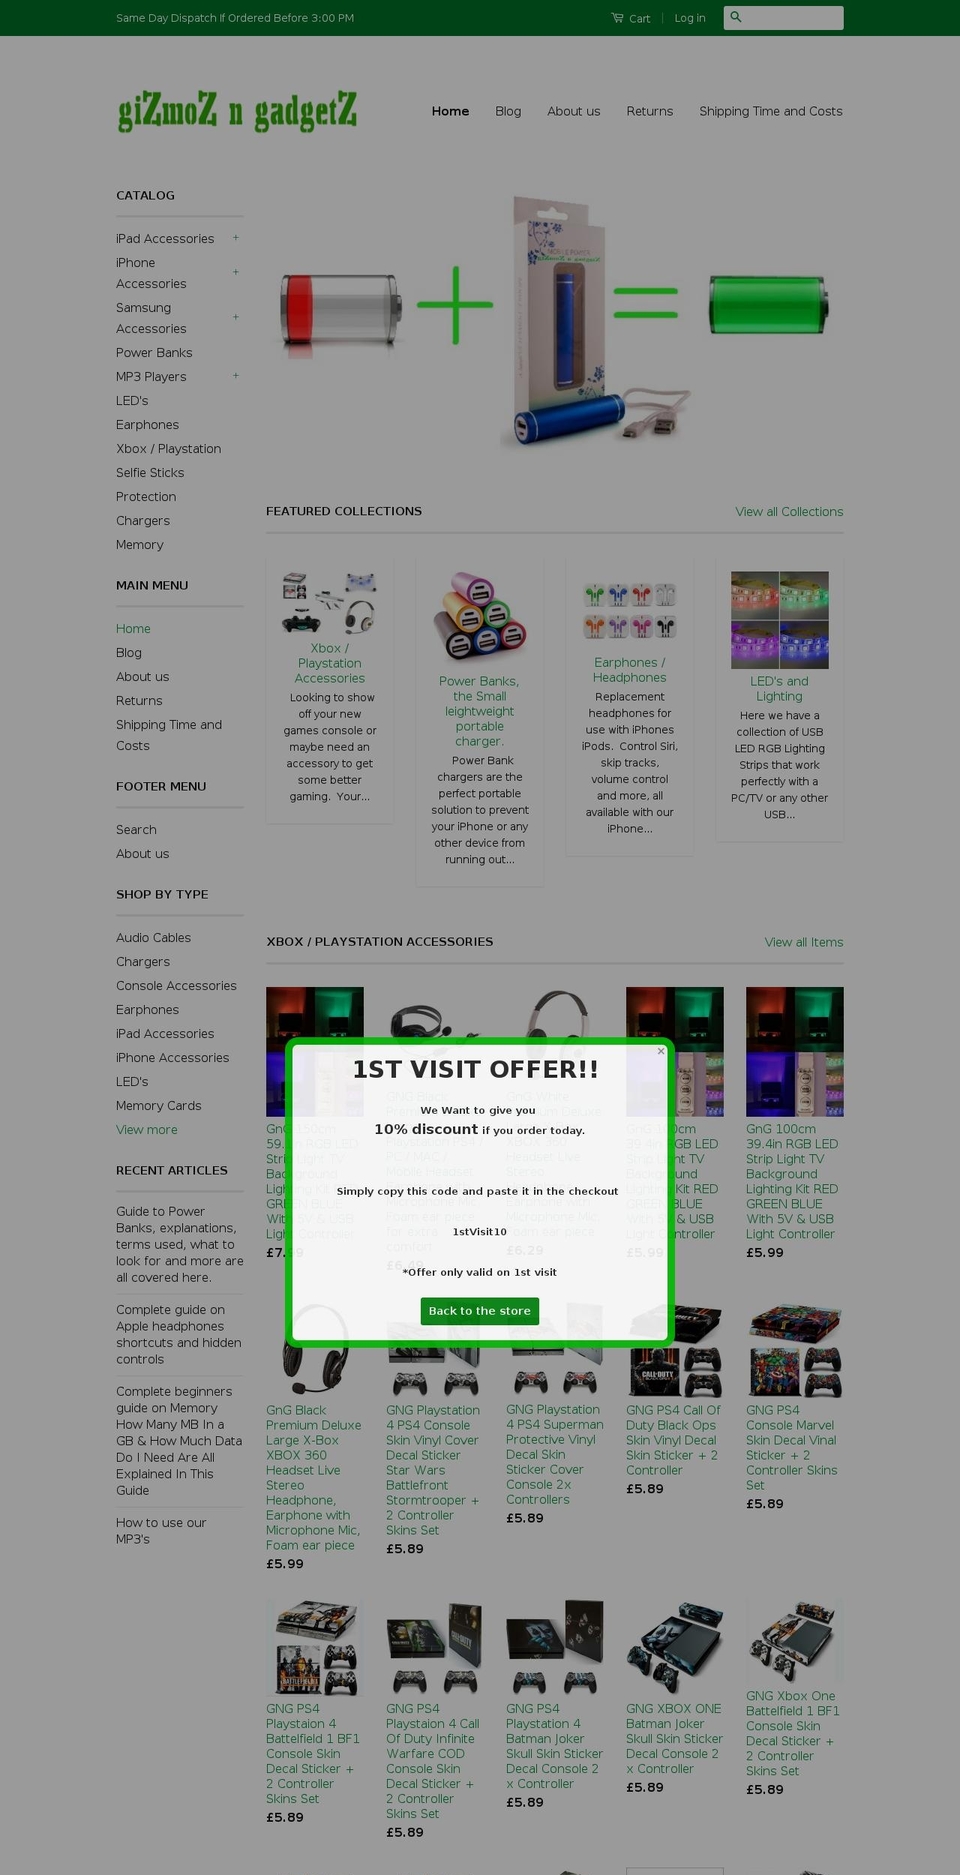 classic Shopify theme site example gizmozngadgetz.com